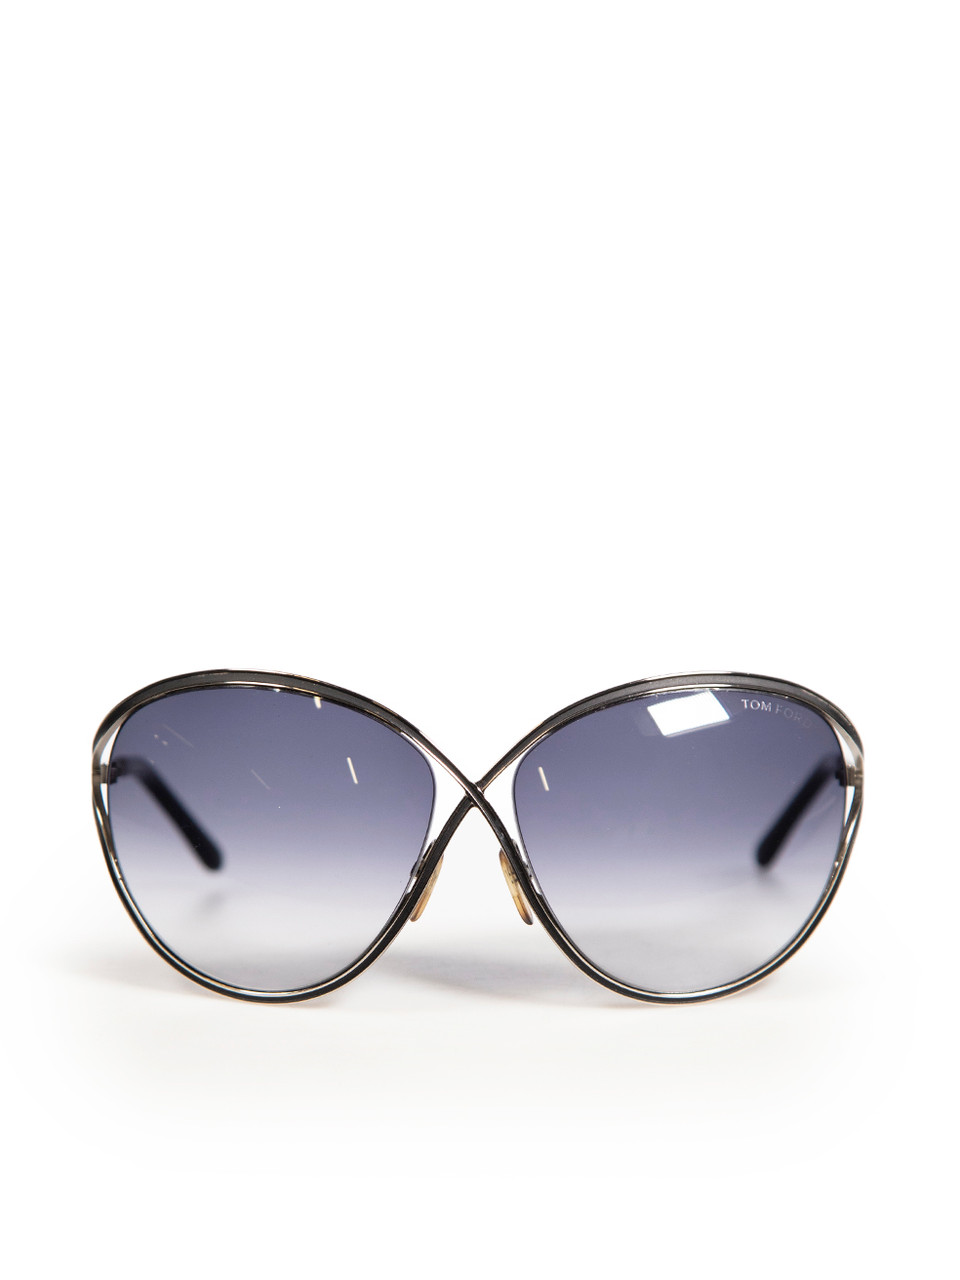 Tom Ford Black Sienna Oversized Sunglasses